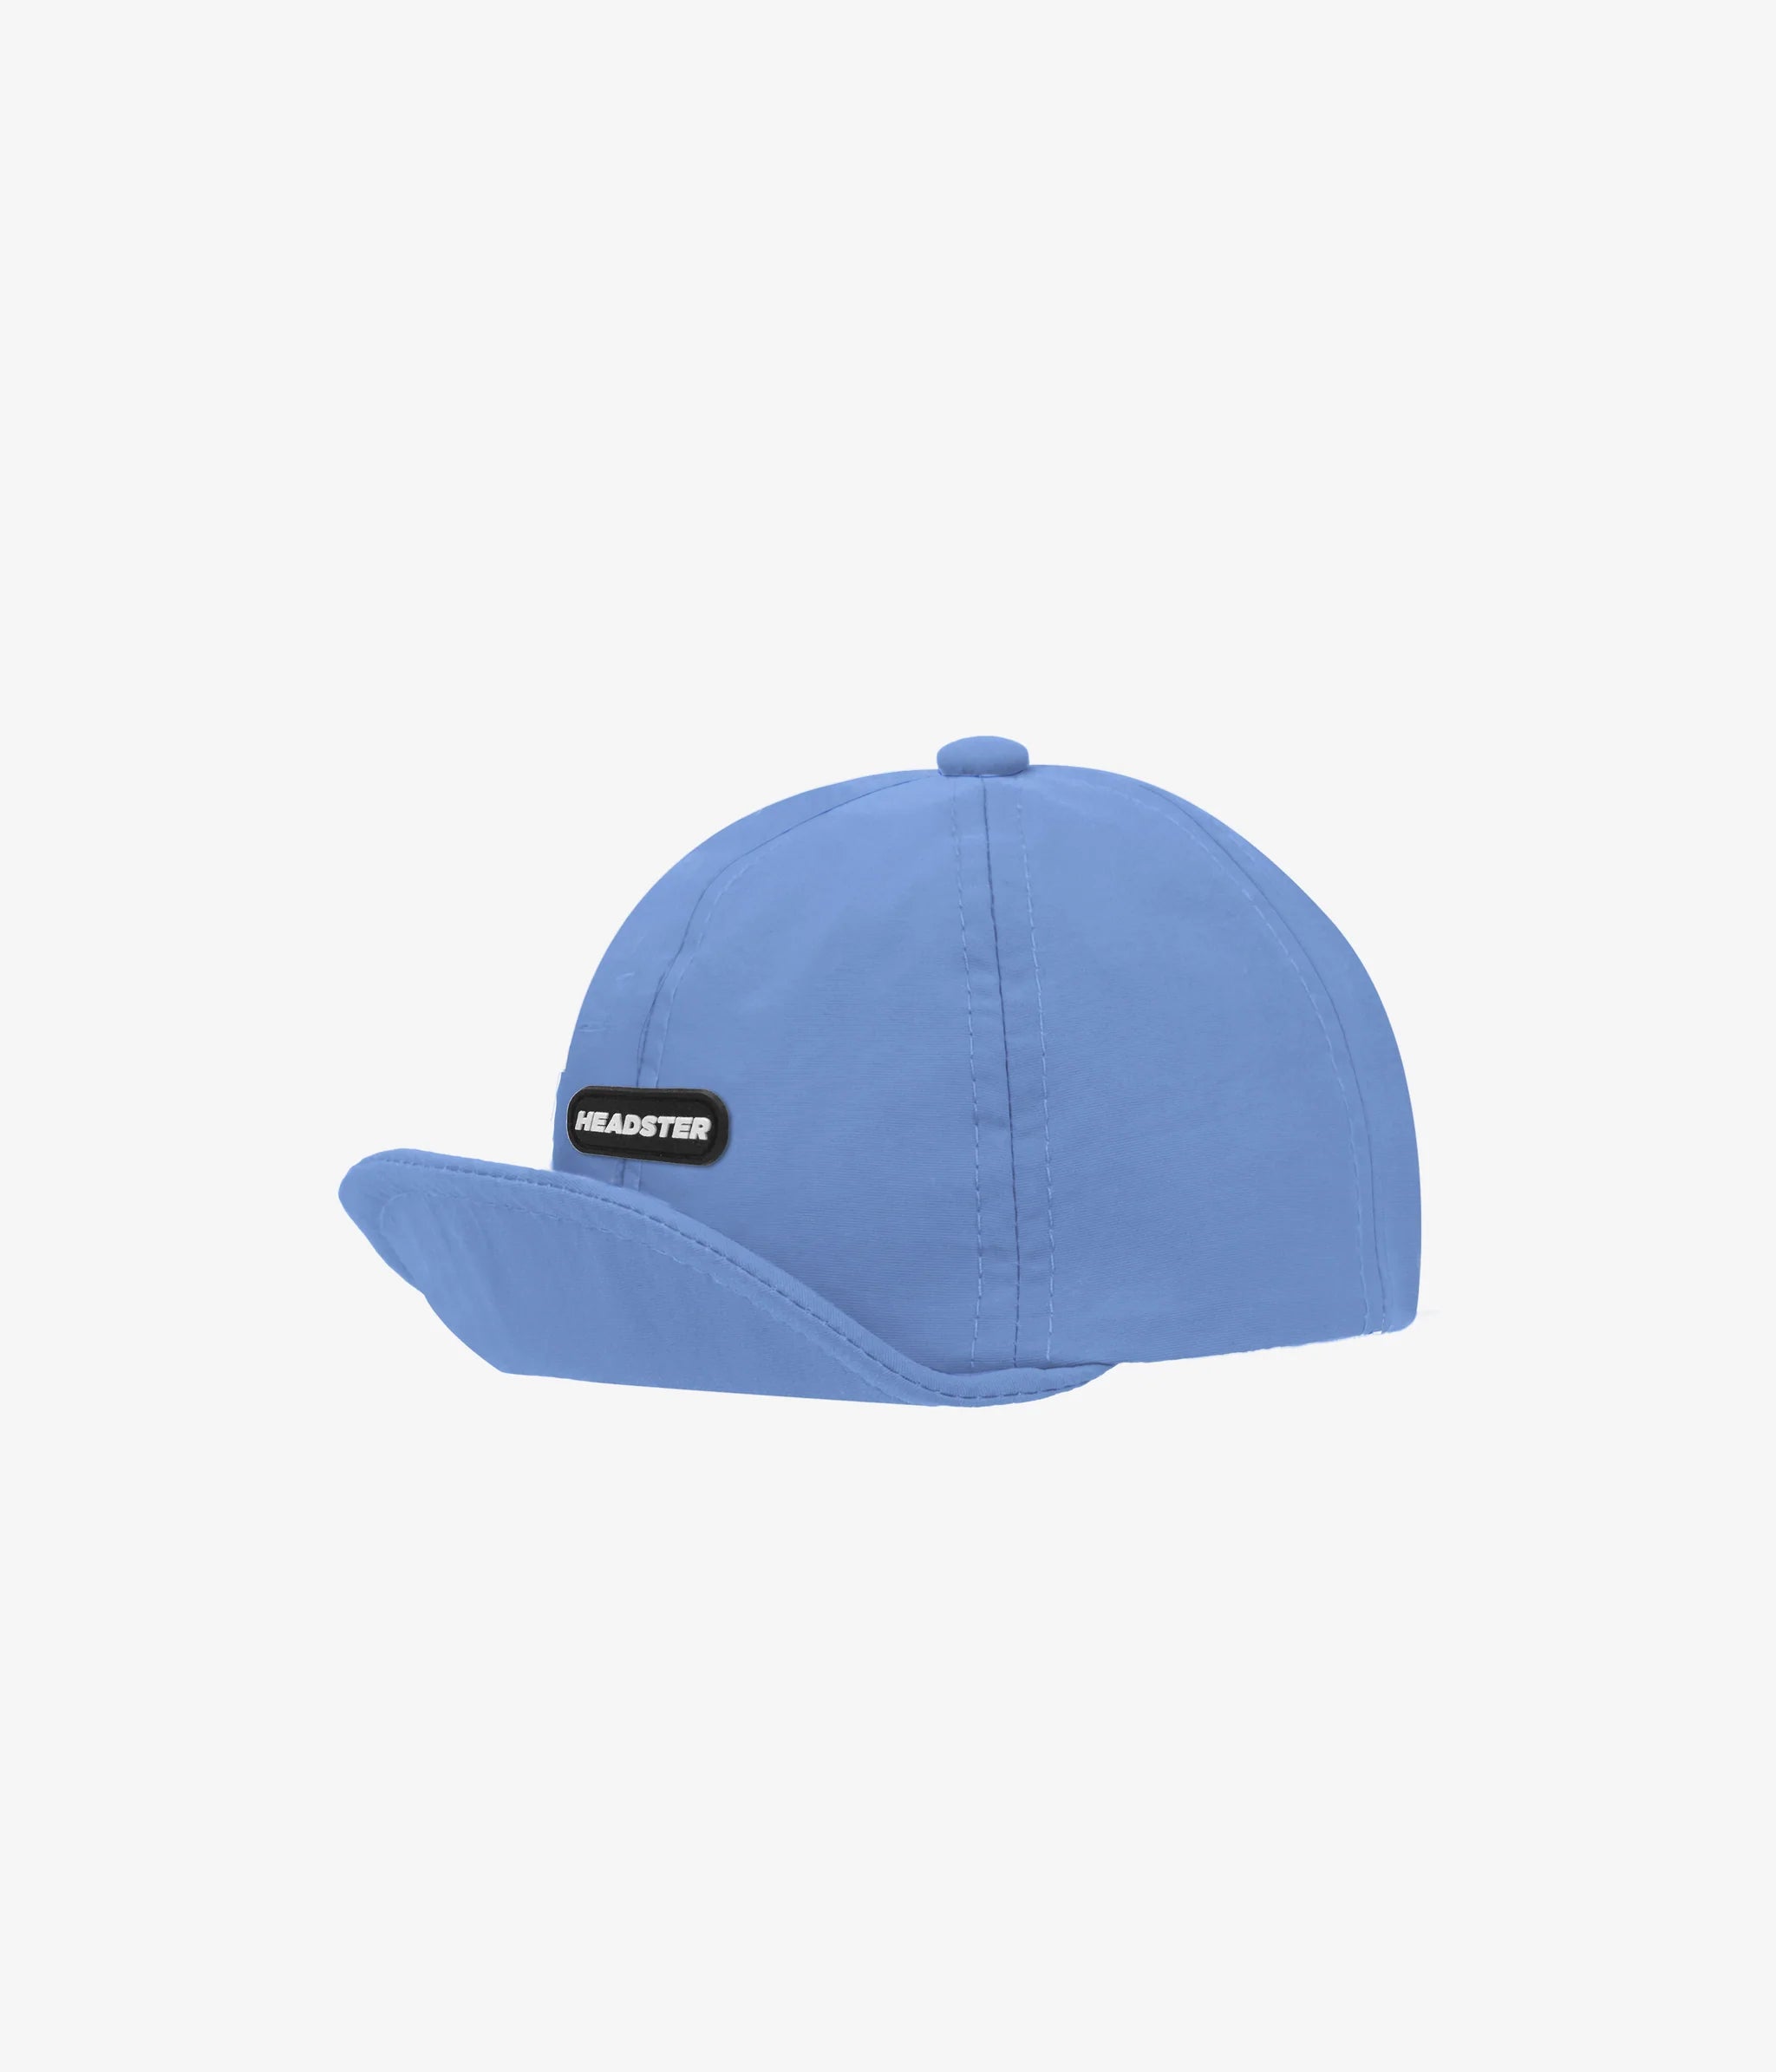 Headster - Swish cap